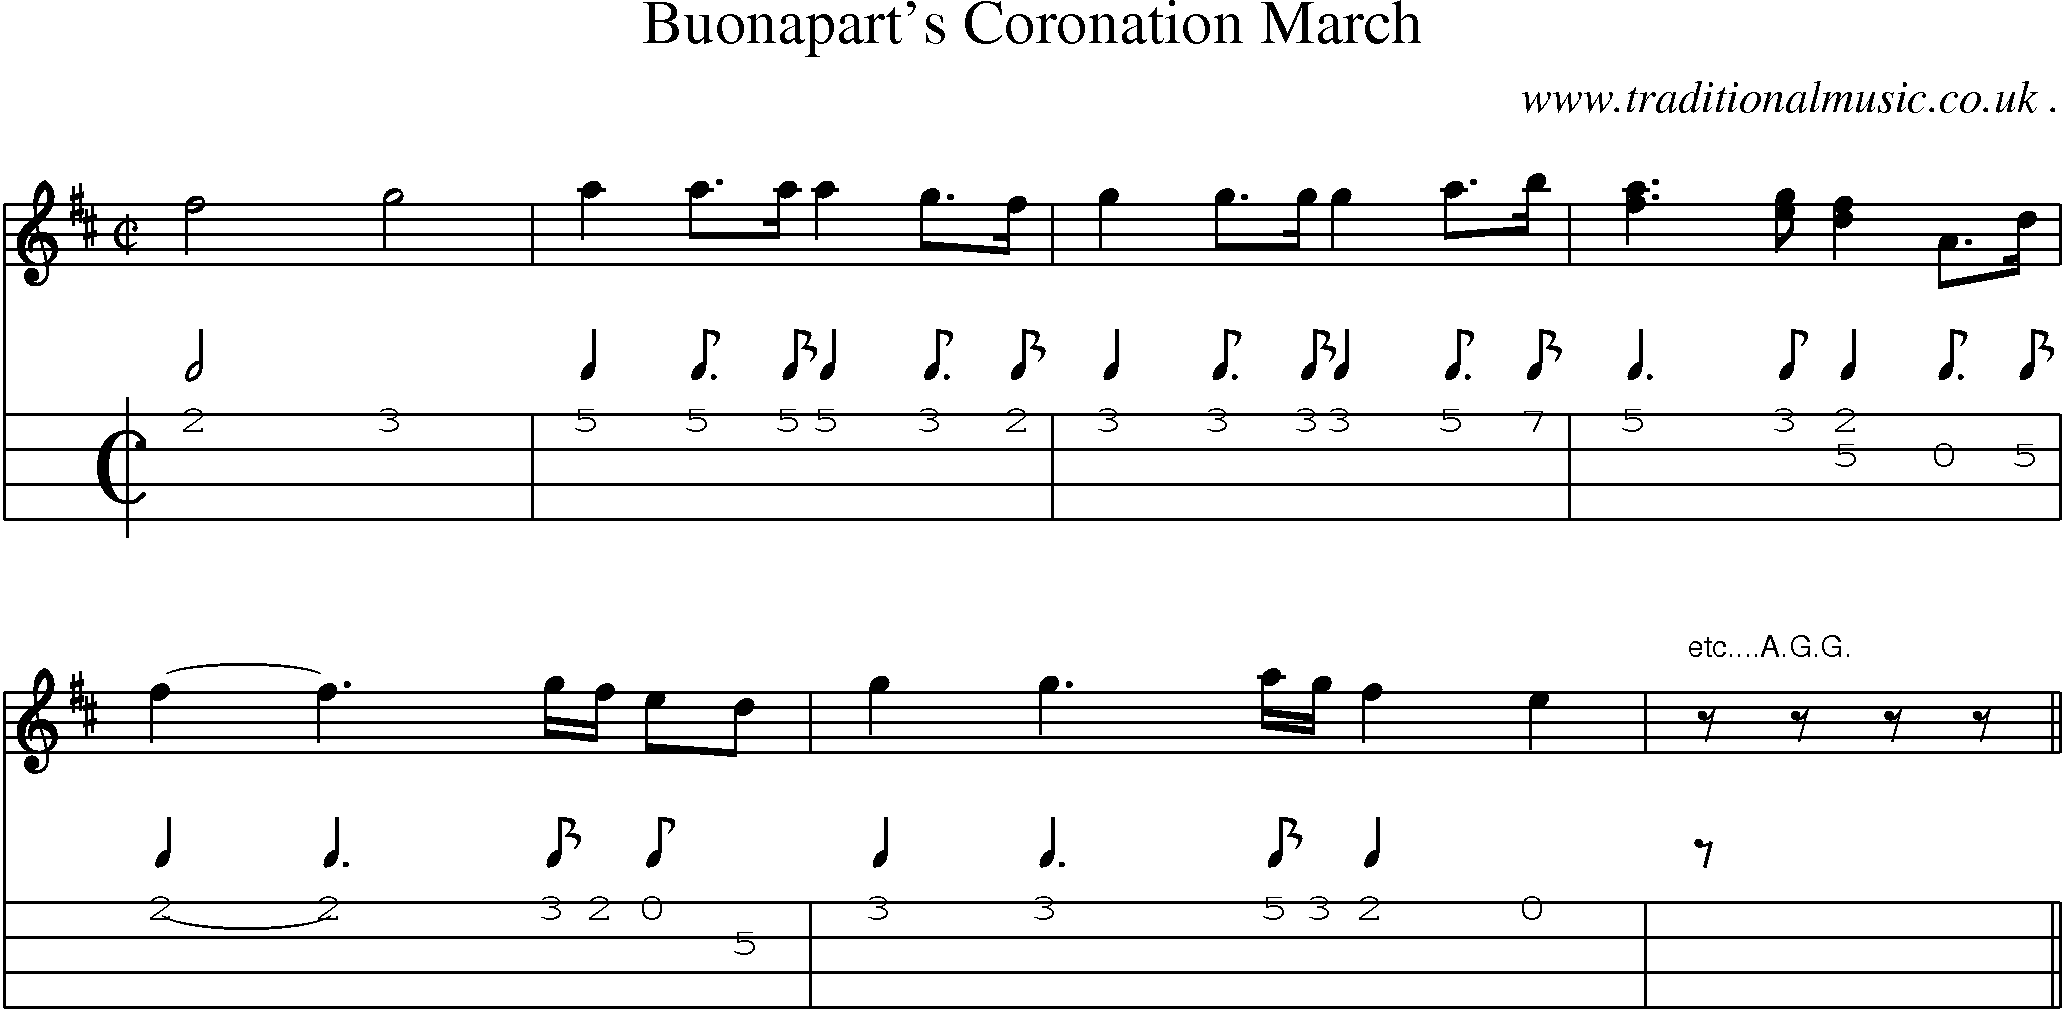 Sheet-Music and Mandolin Tabs for Buonaparts Coronation March